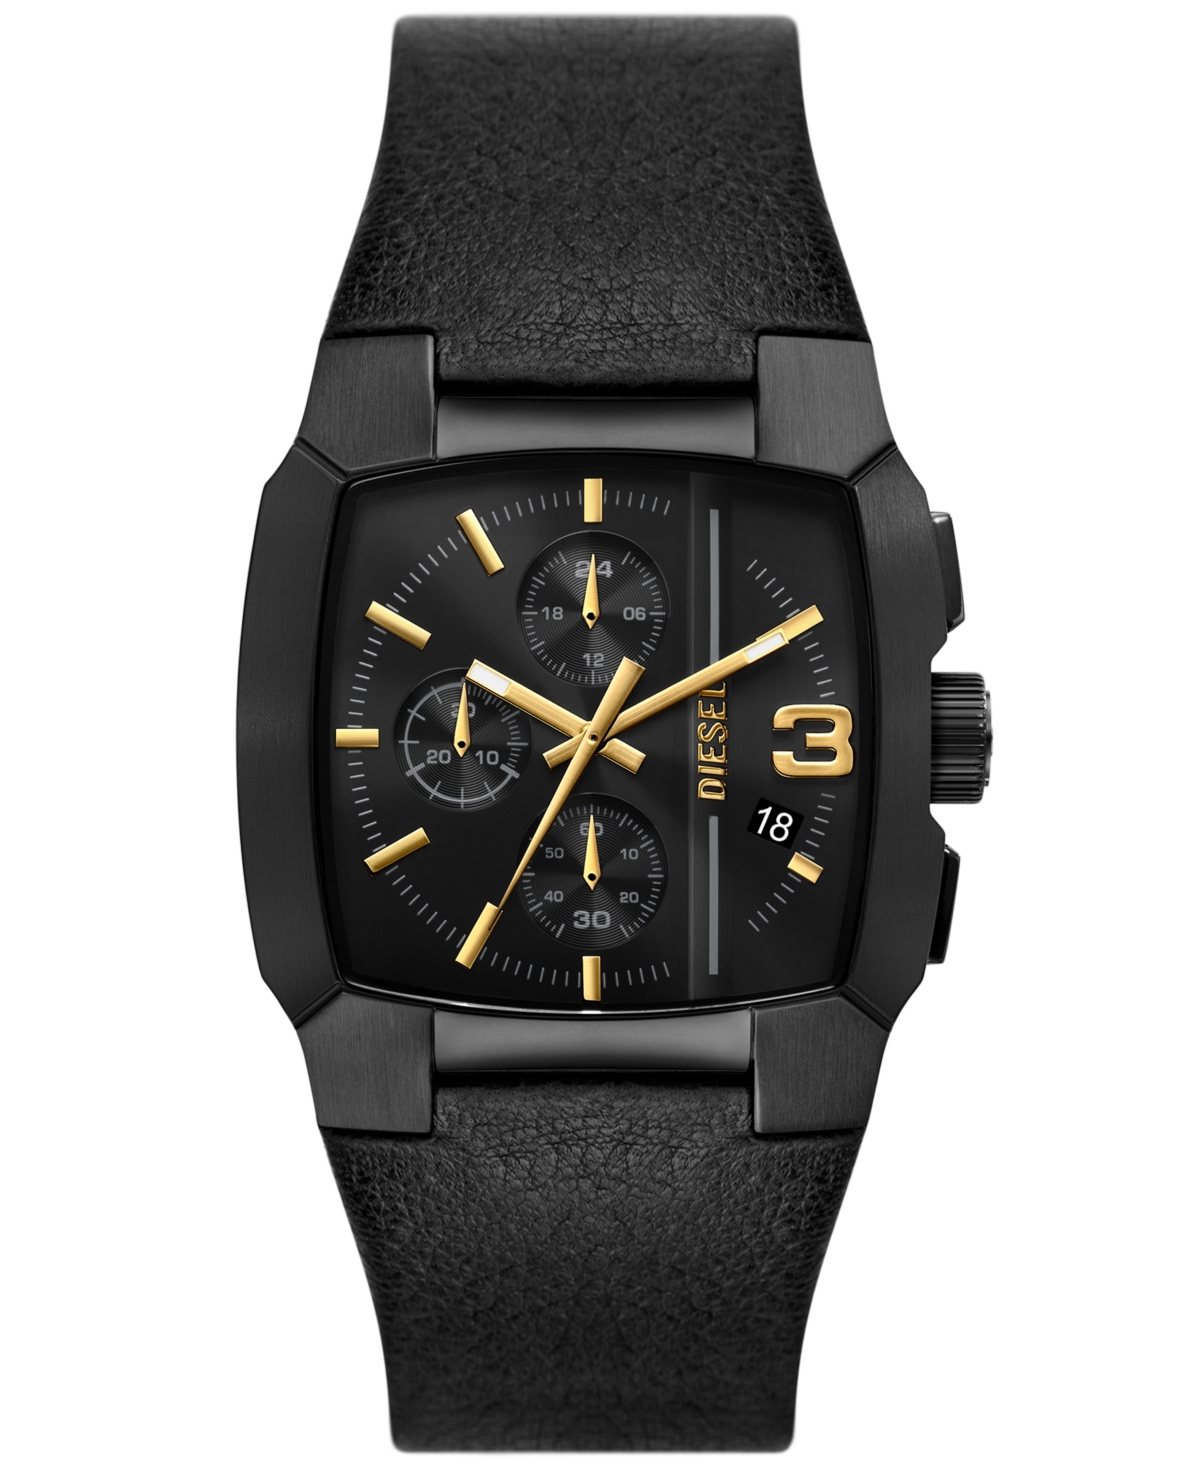 Diesel Men's Cliffhanger Chronograph Black Leather Watch 40mm